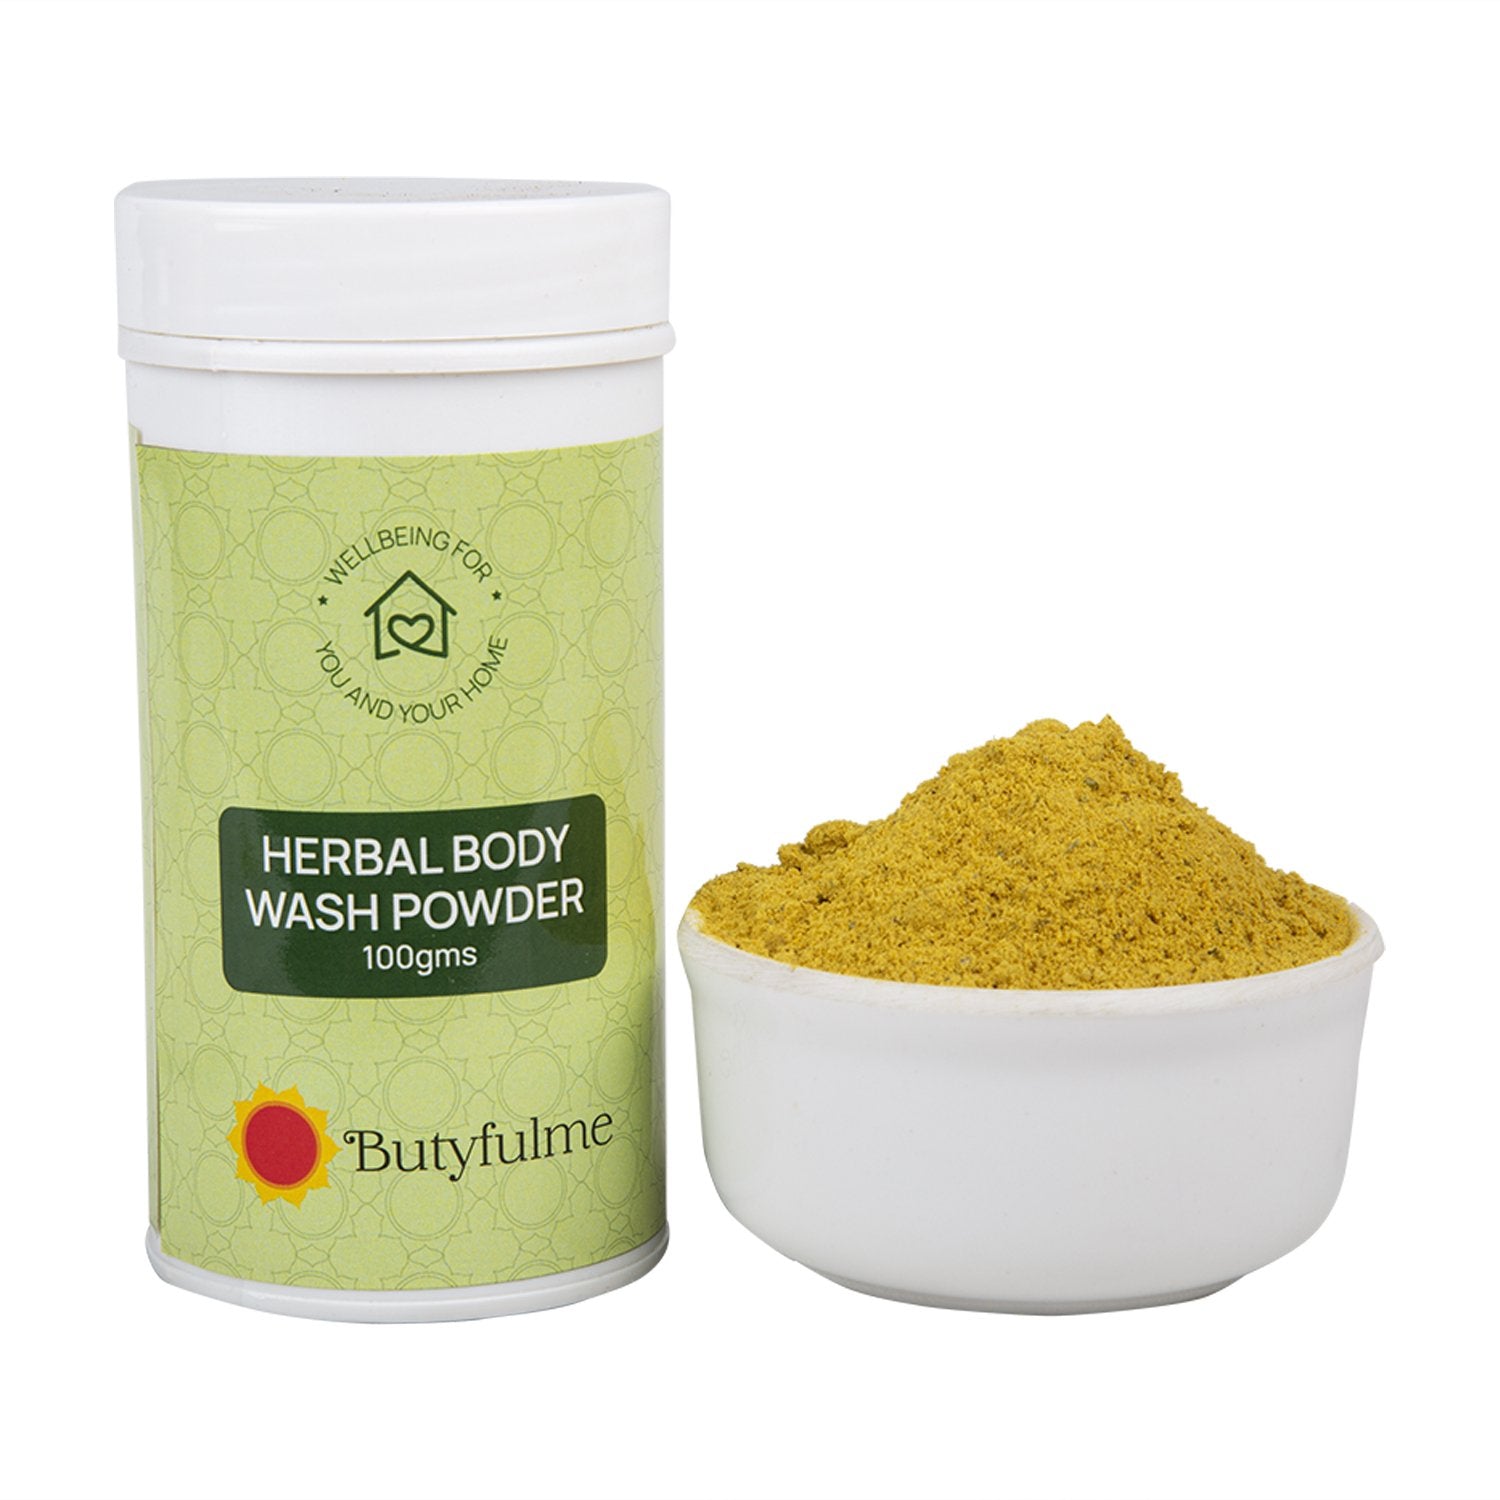 Butyfulme Thazham Herbal body wash powder 100gms - Pack of 2 - hfnl!fe